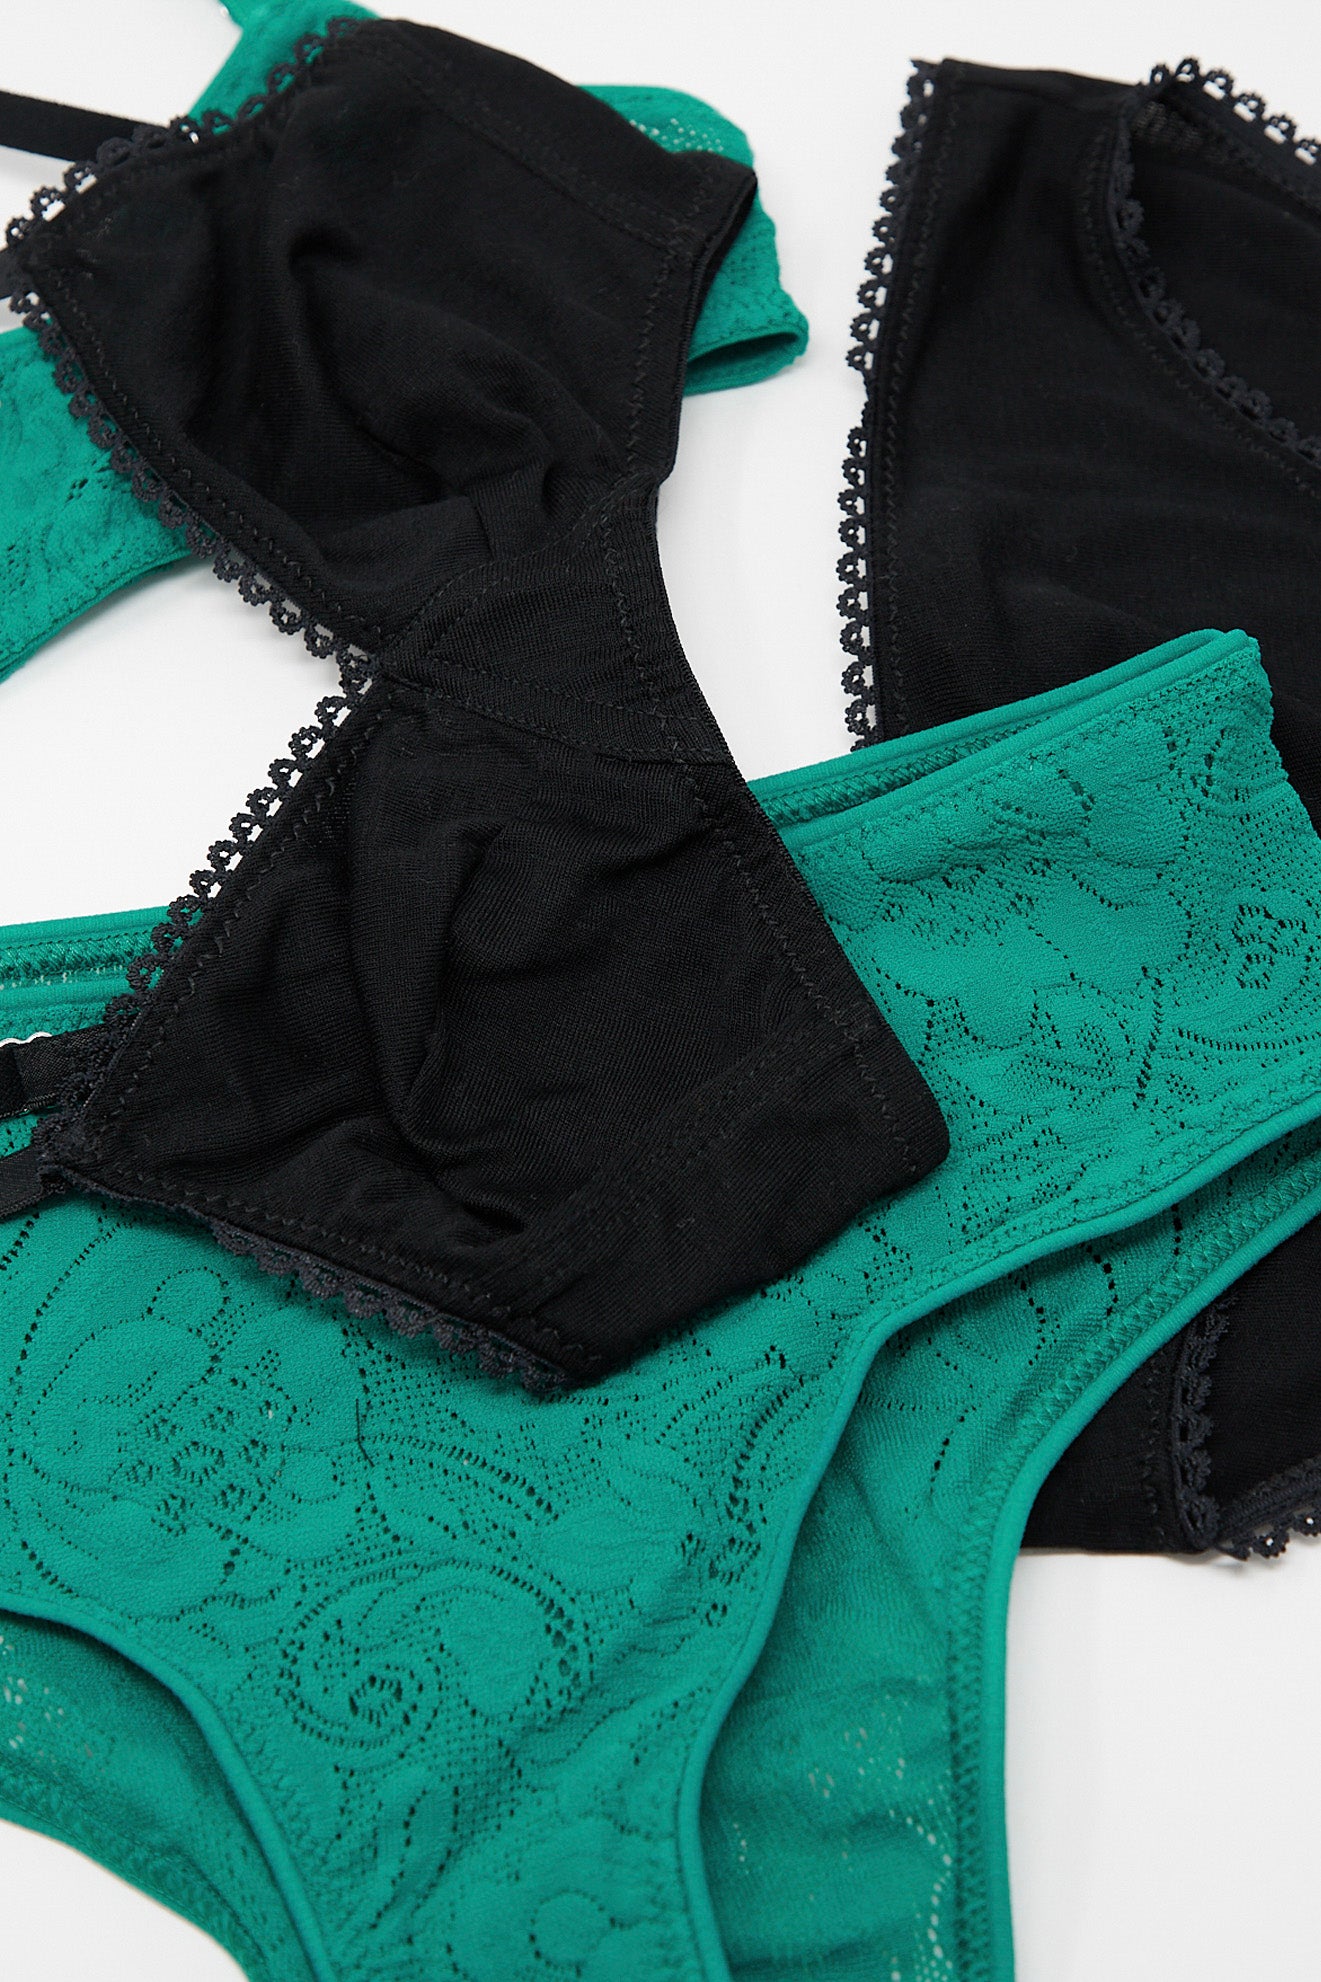 A set of Antonia Bralette in Black and green organic cotton underwear by Araks.